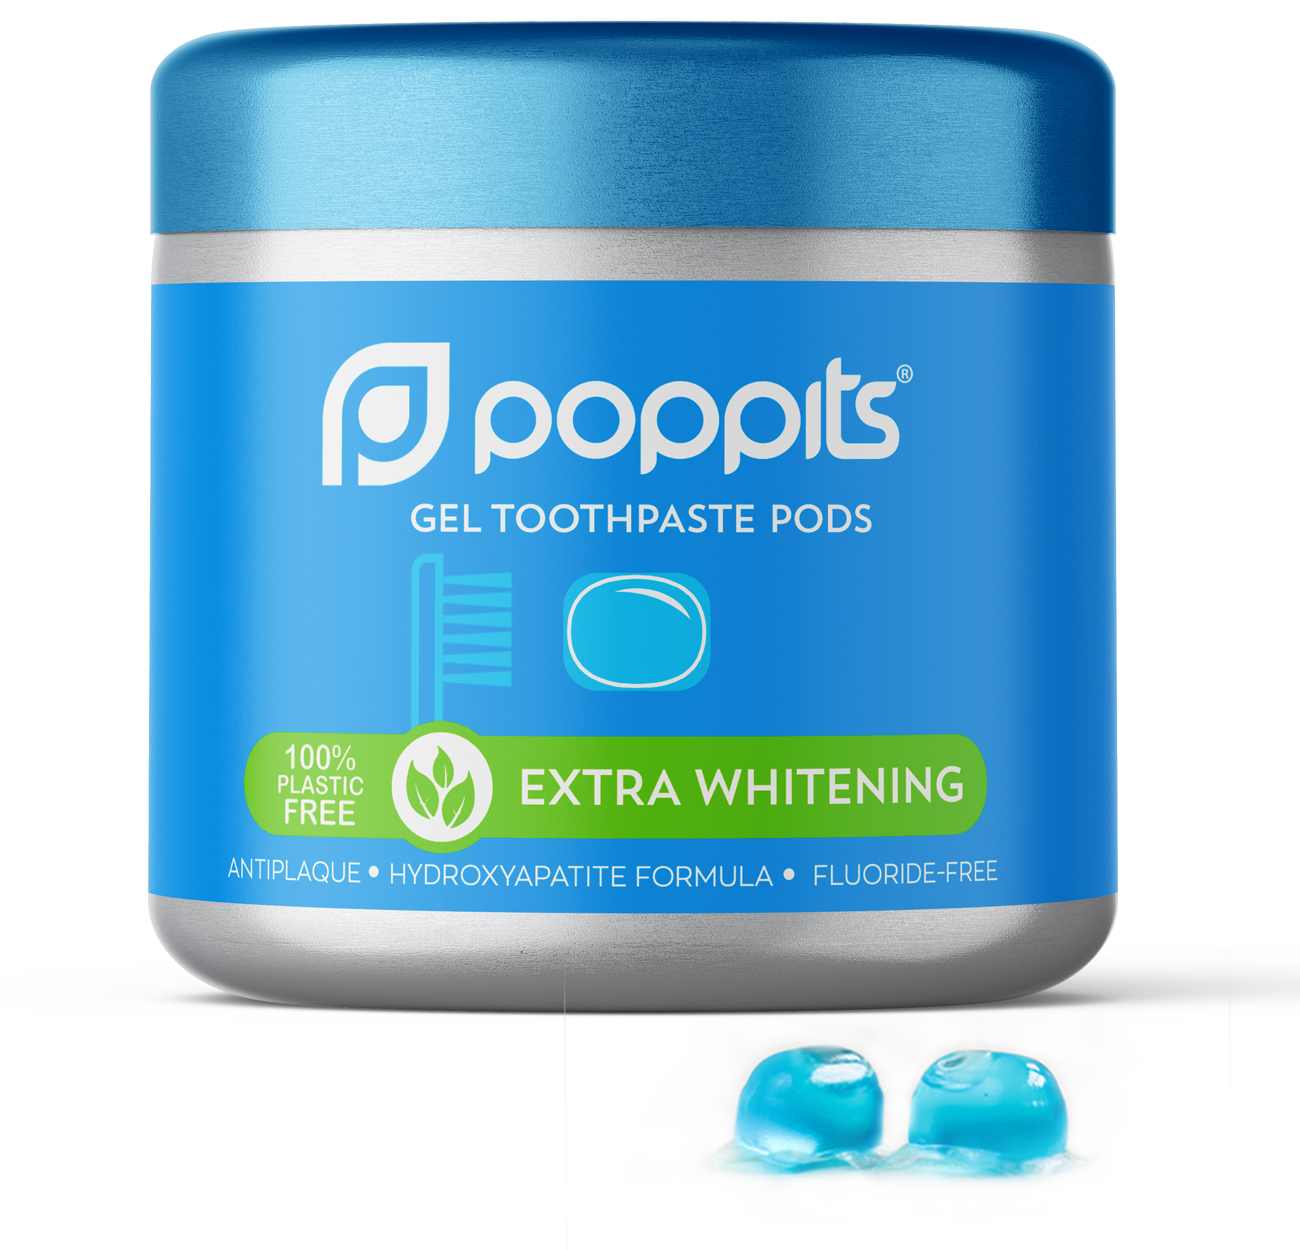 Poppits gel toothpaste pods